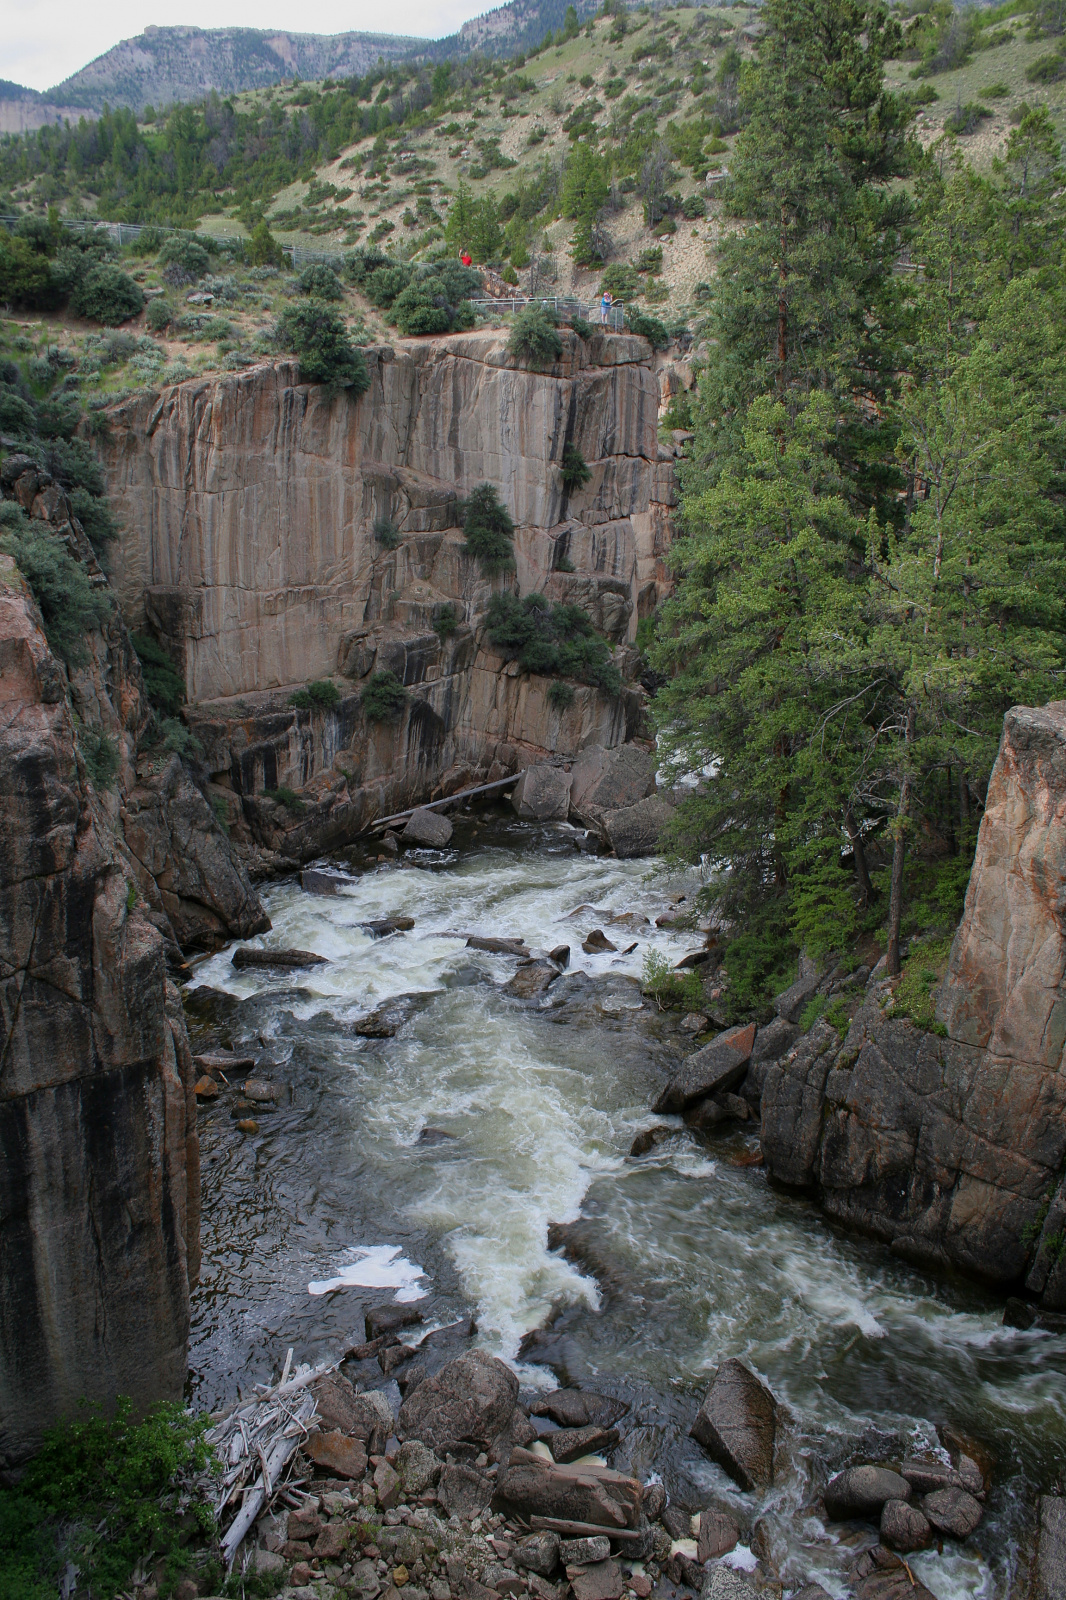 Shell Creek (Podróże » USA: Epopeja Czejeńska » Okolica » Bighorn Mountains » Shell Canyon i Shell Falls)